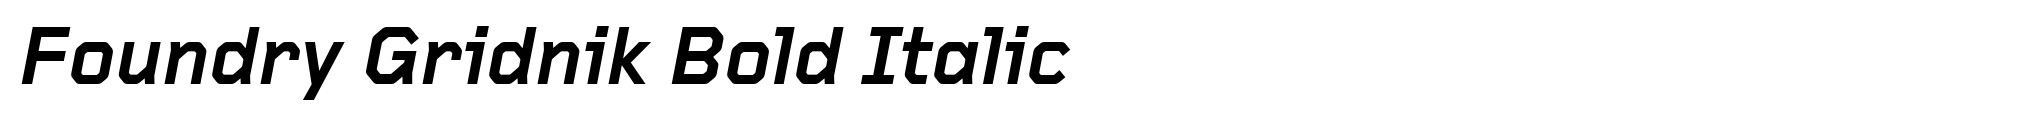 Foundry Gridnik Bold Italic image